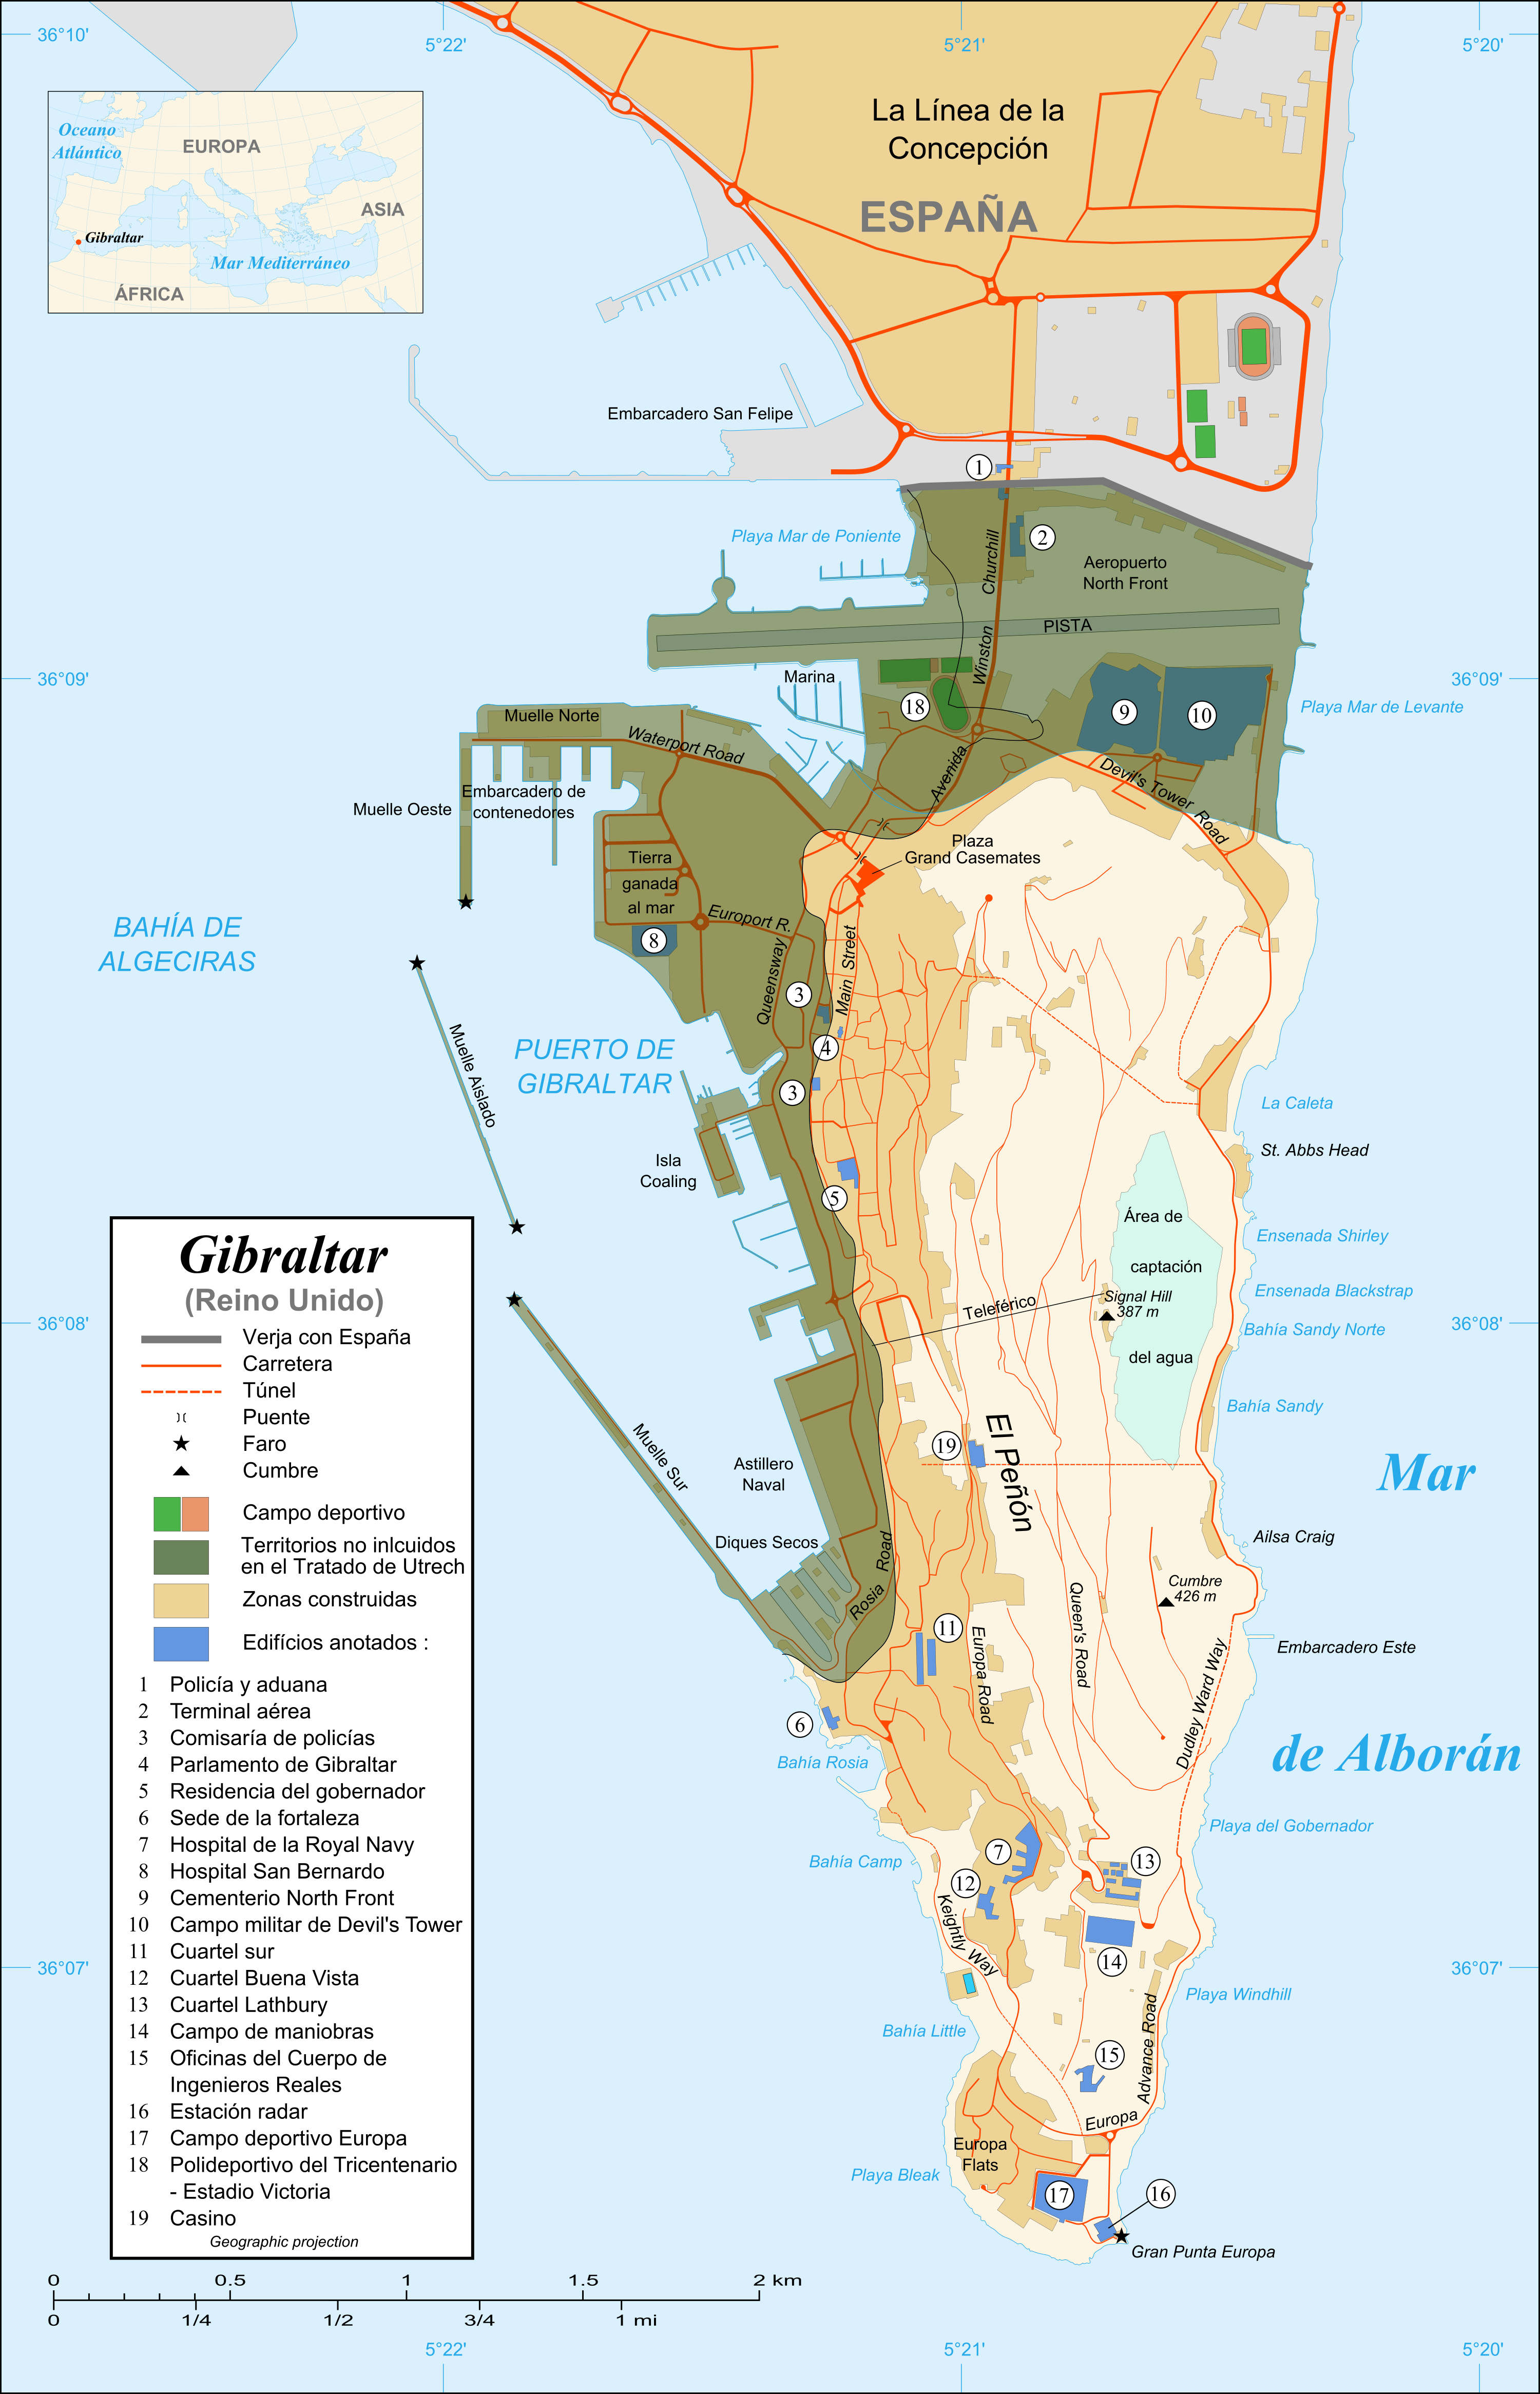 large-detailed-gibraltar-tourist-map.jpg